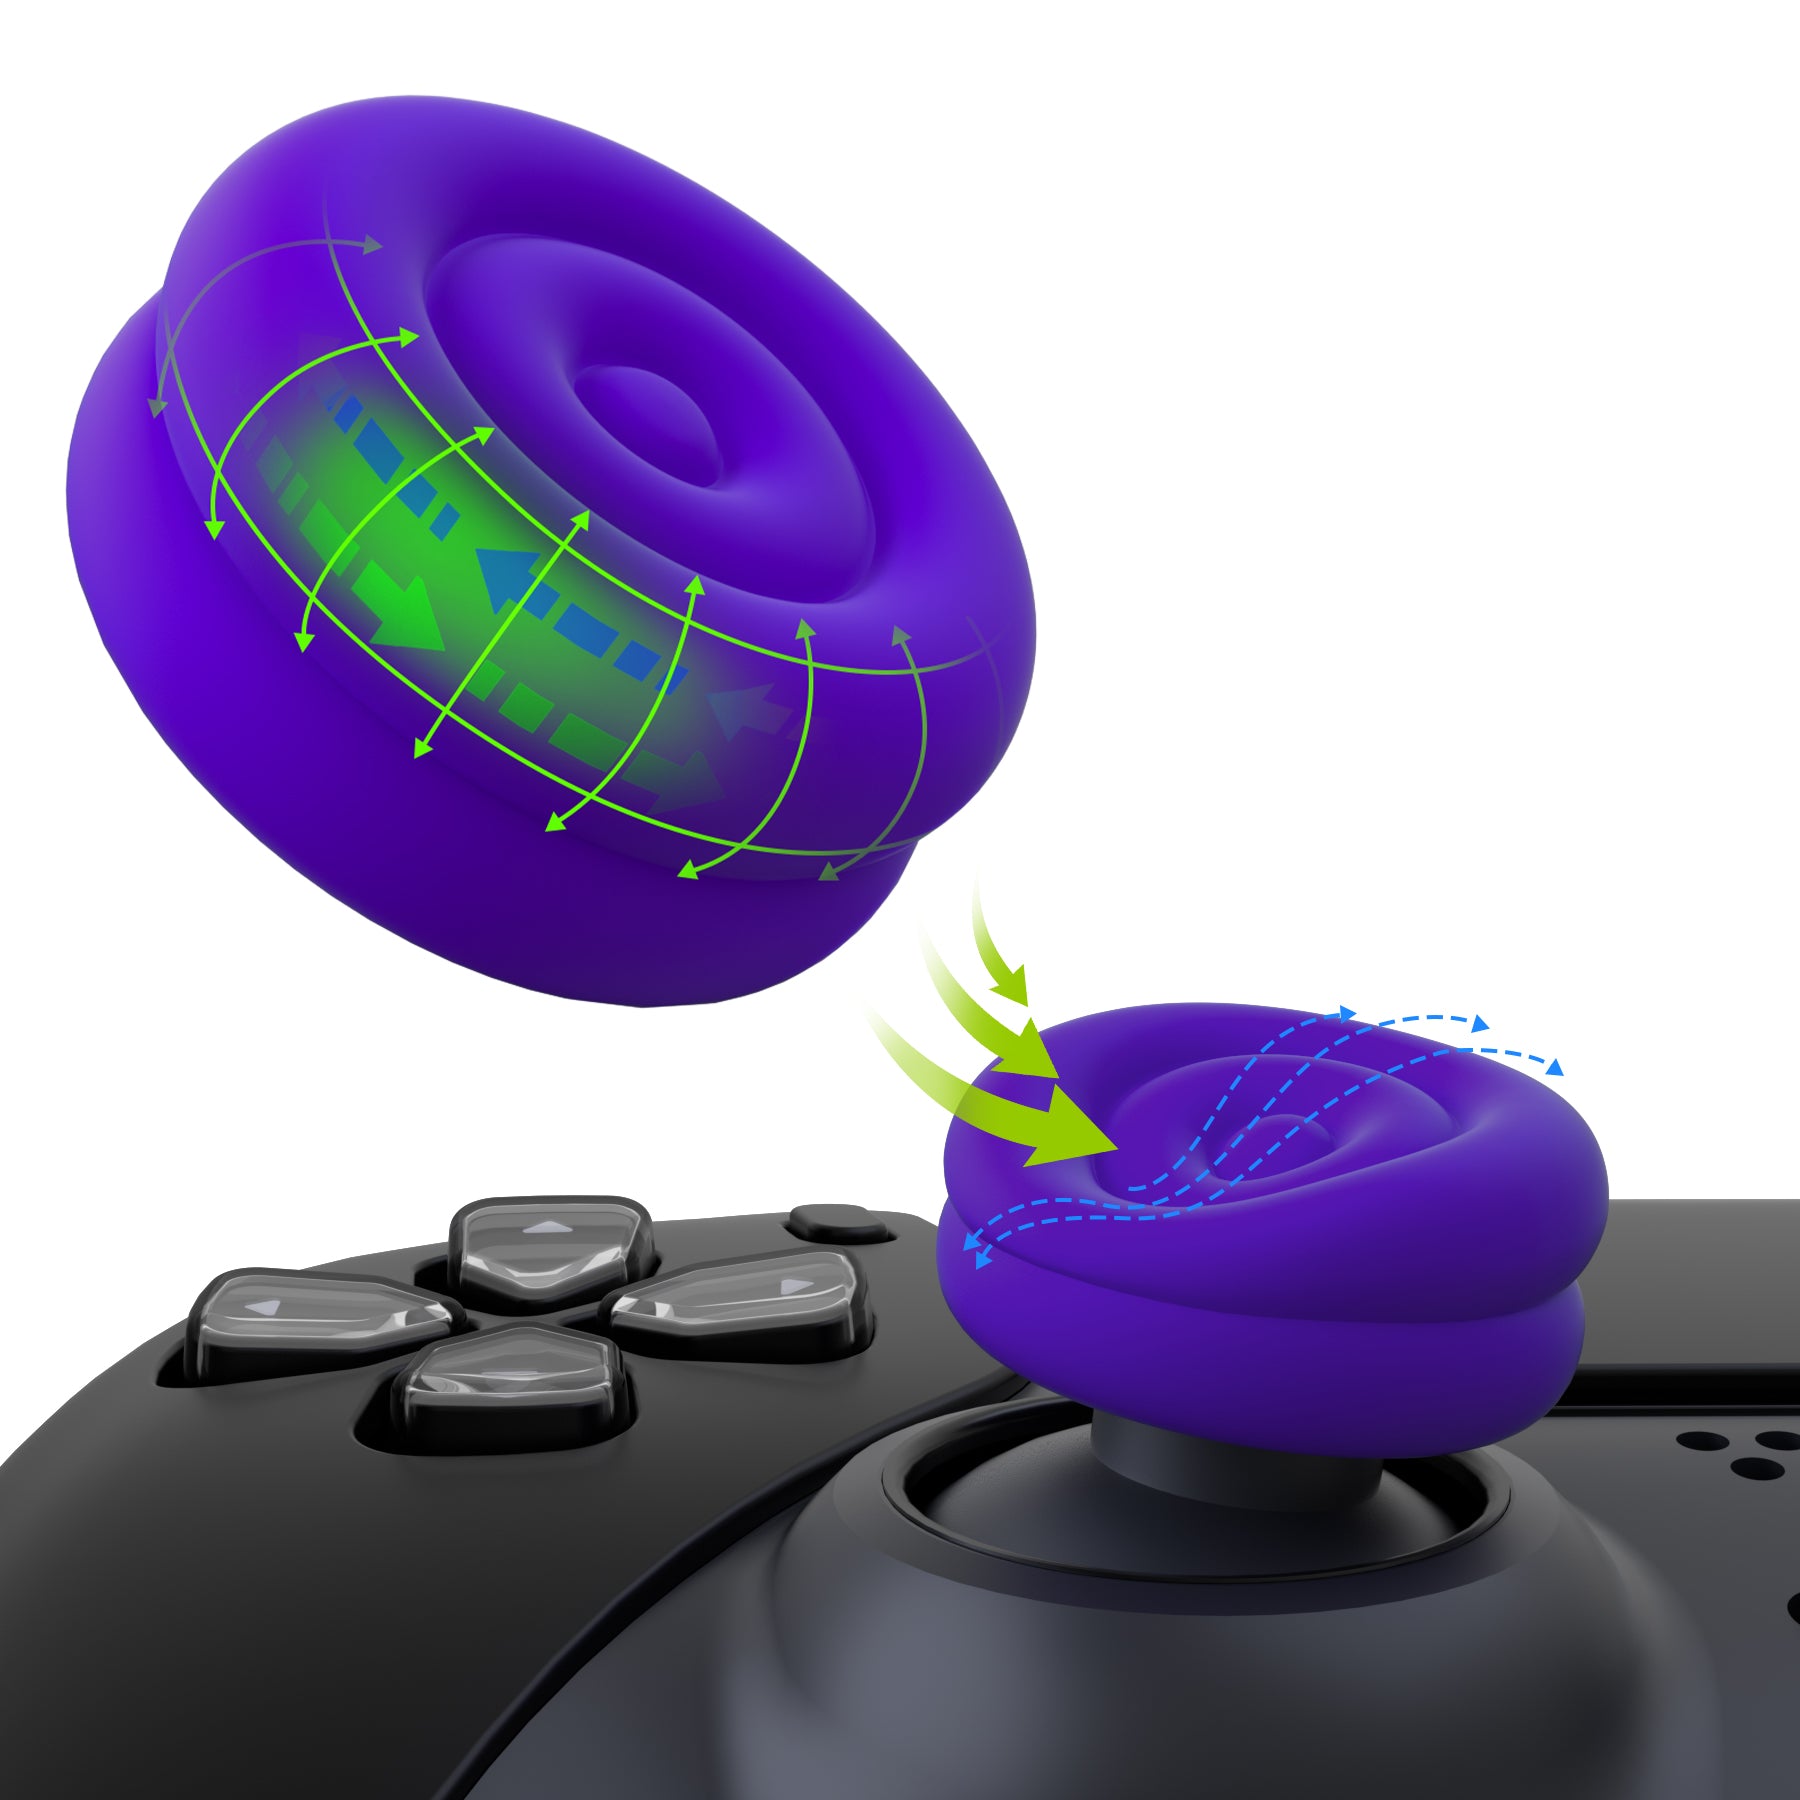 PlayVital Black Ergonomic Stick Caps Thumb Grips for PS5, for PS4